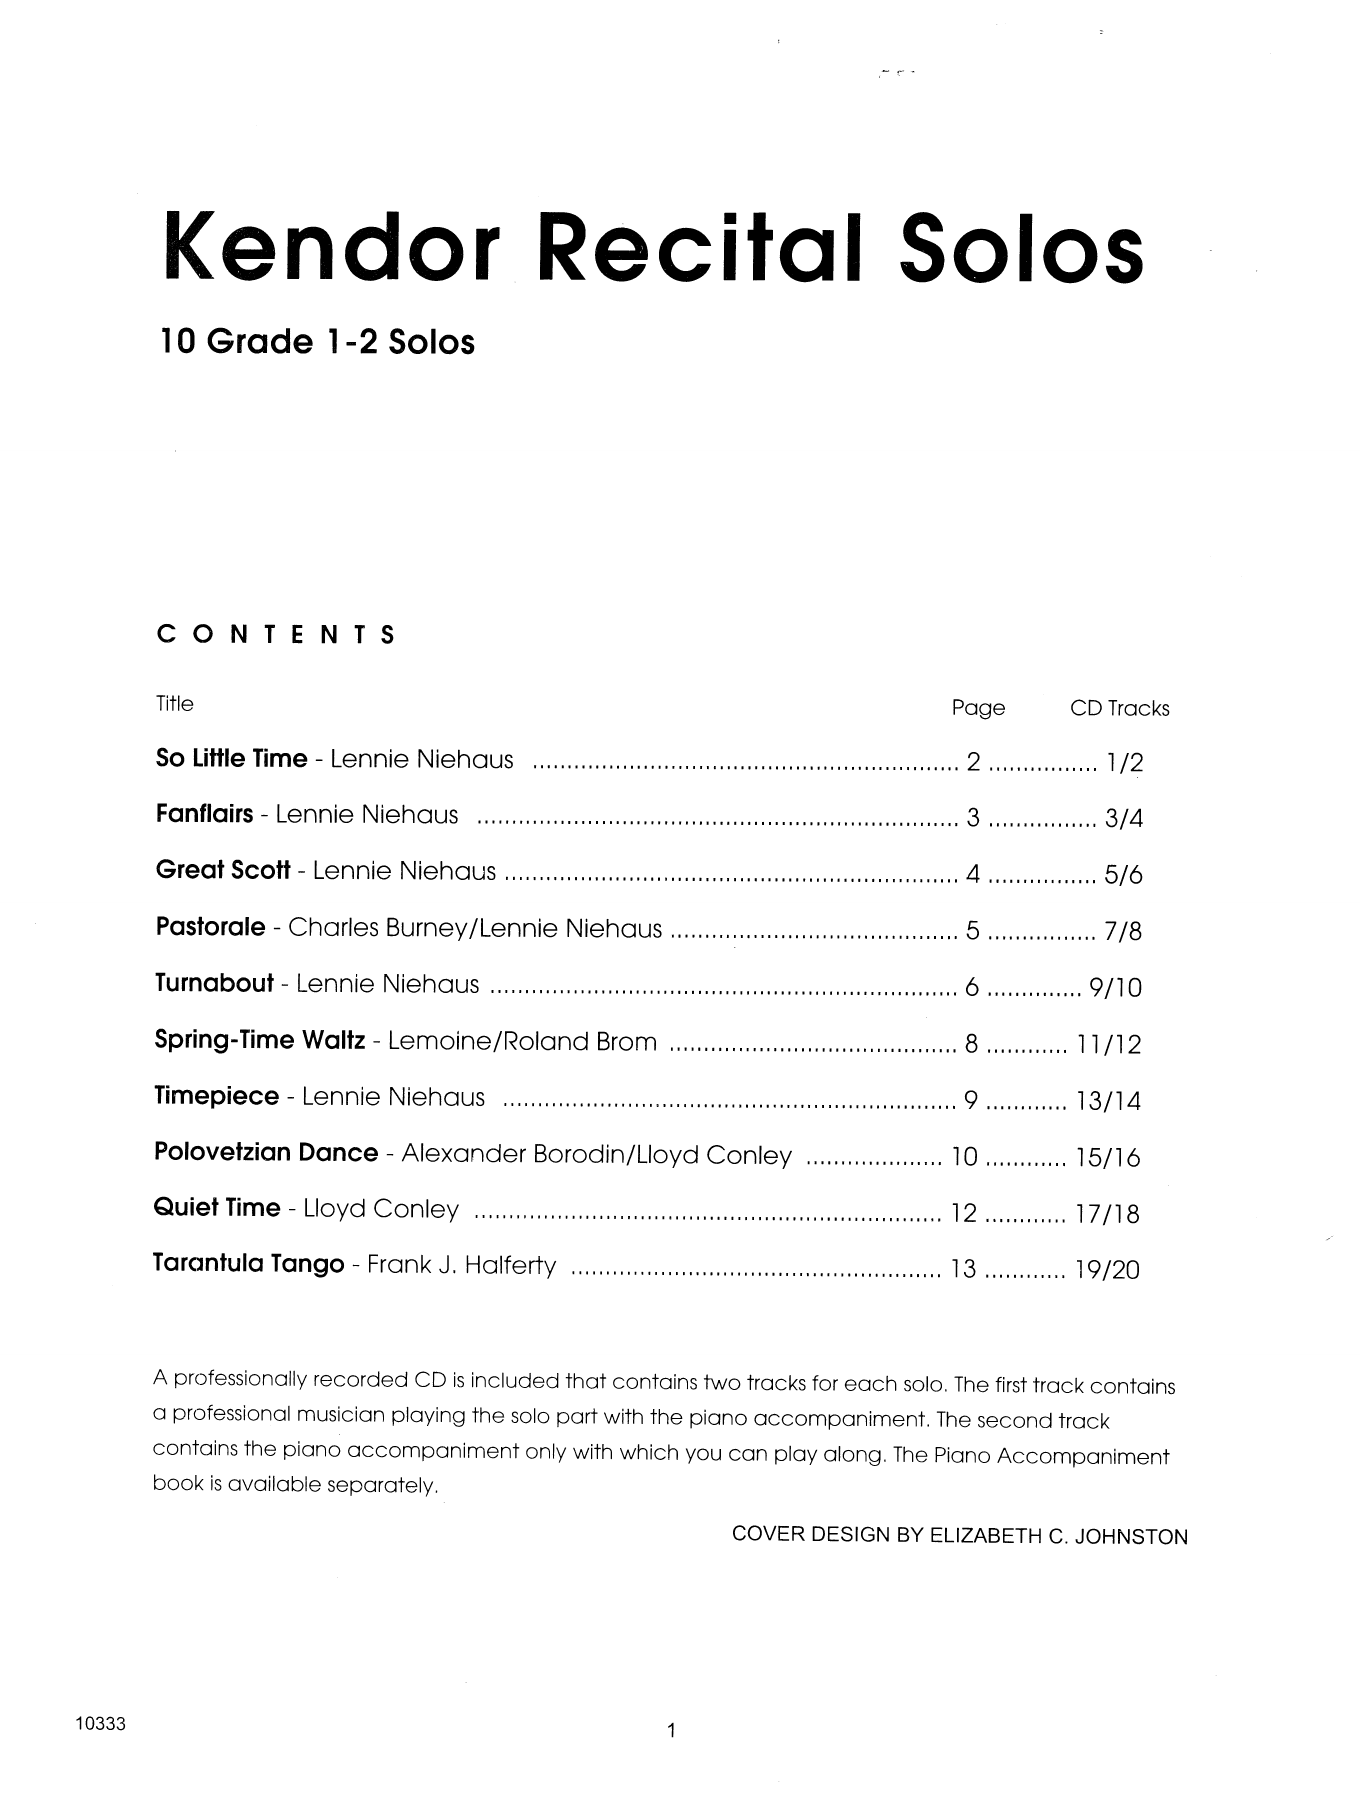 Download Various Kendor Recital Solos - Bb Clarinet - So Sheet Music